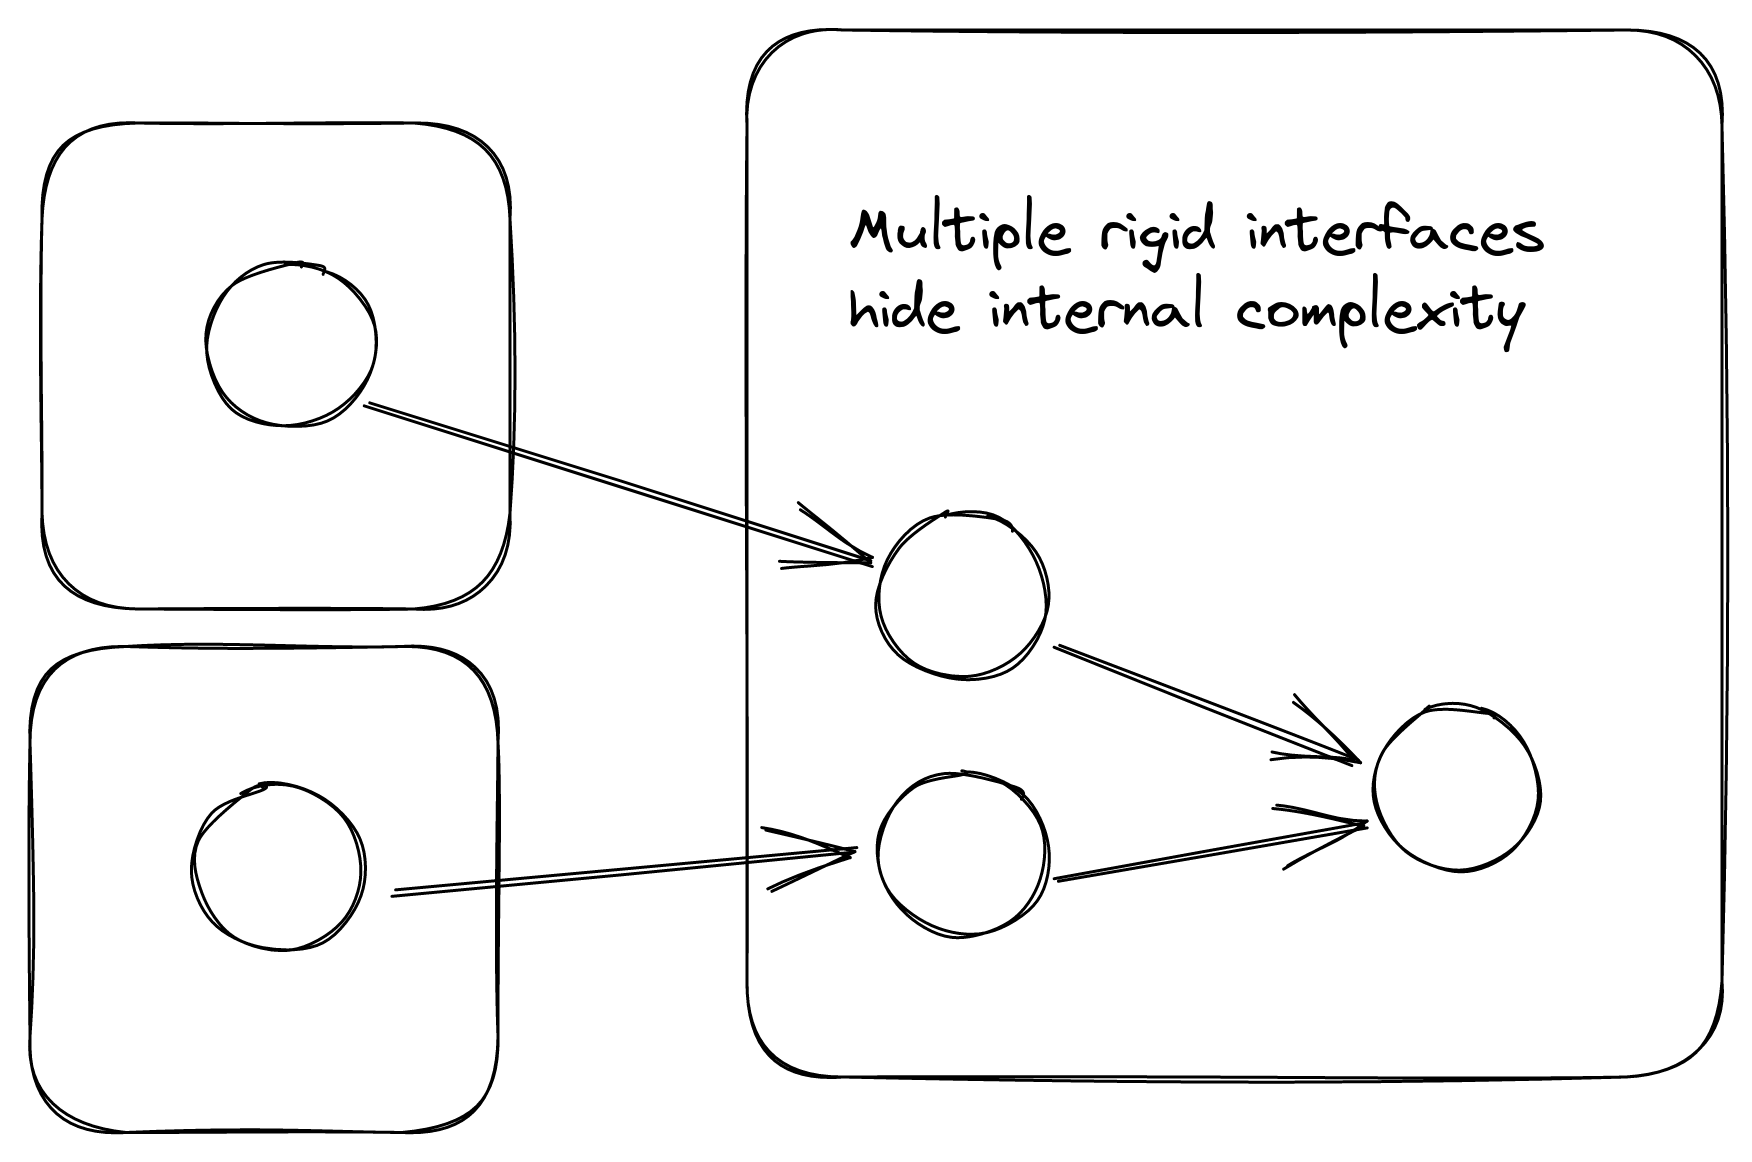 Multiple rigid interfaces hide internal complexity